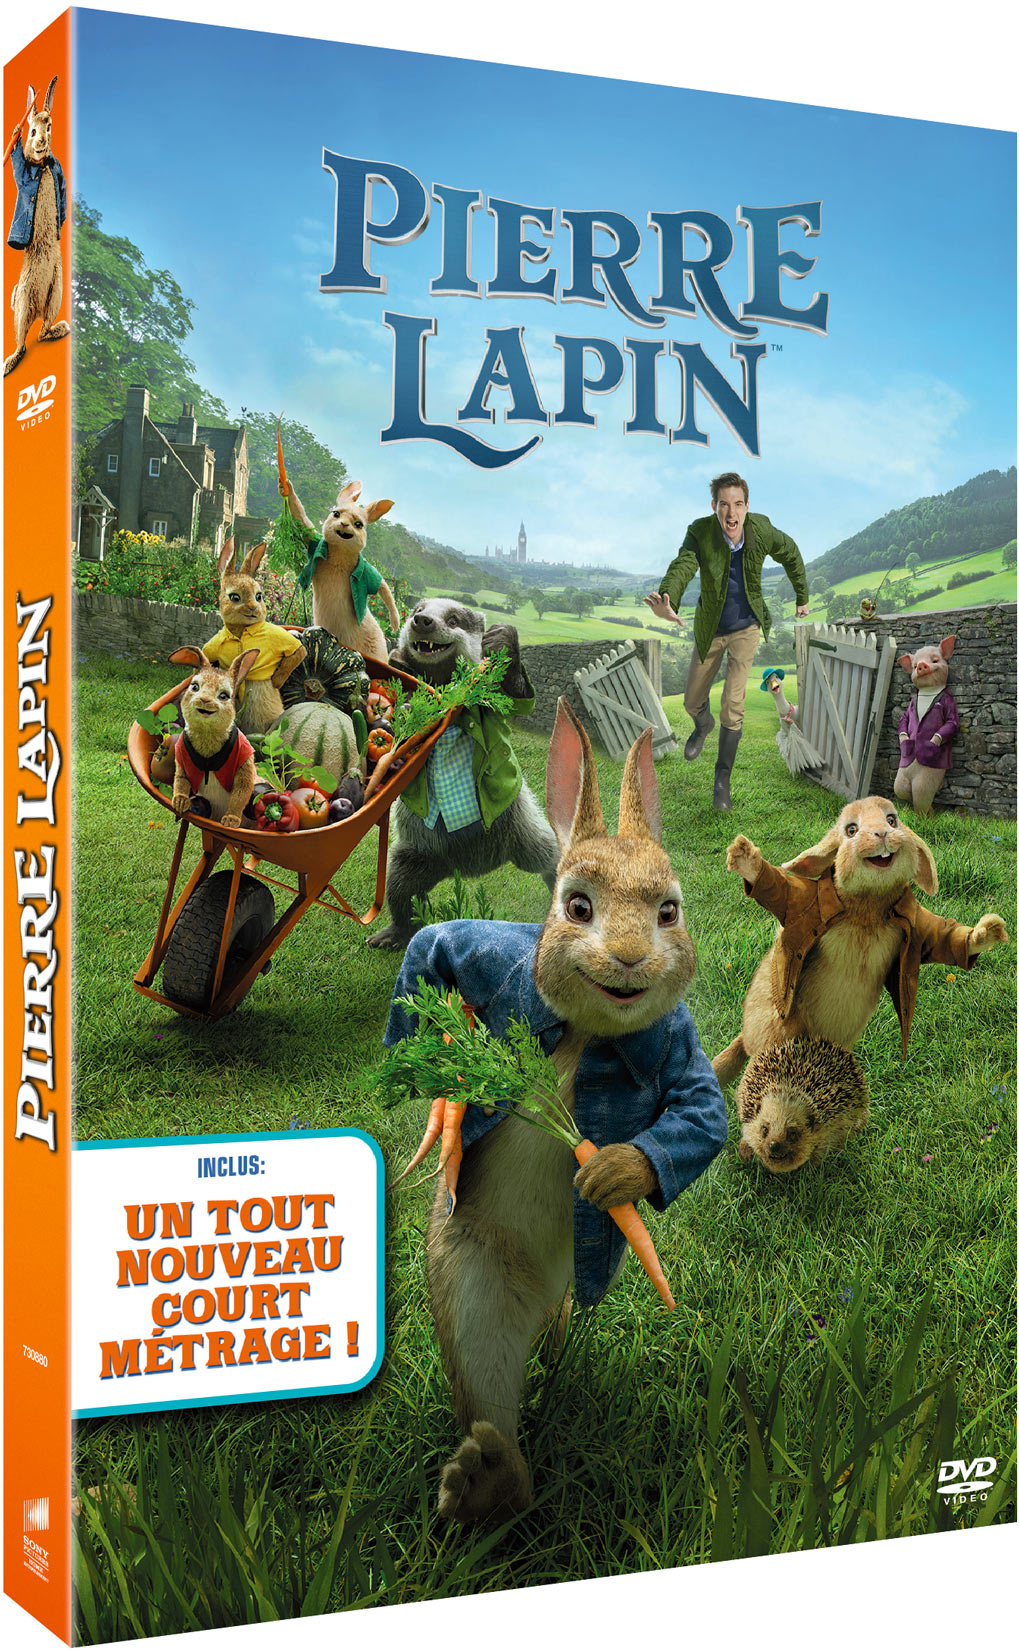 PIERRE LAPIN - DVD